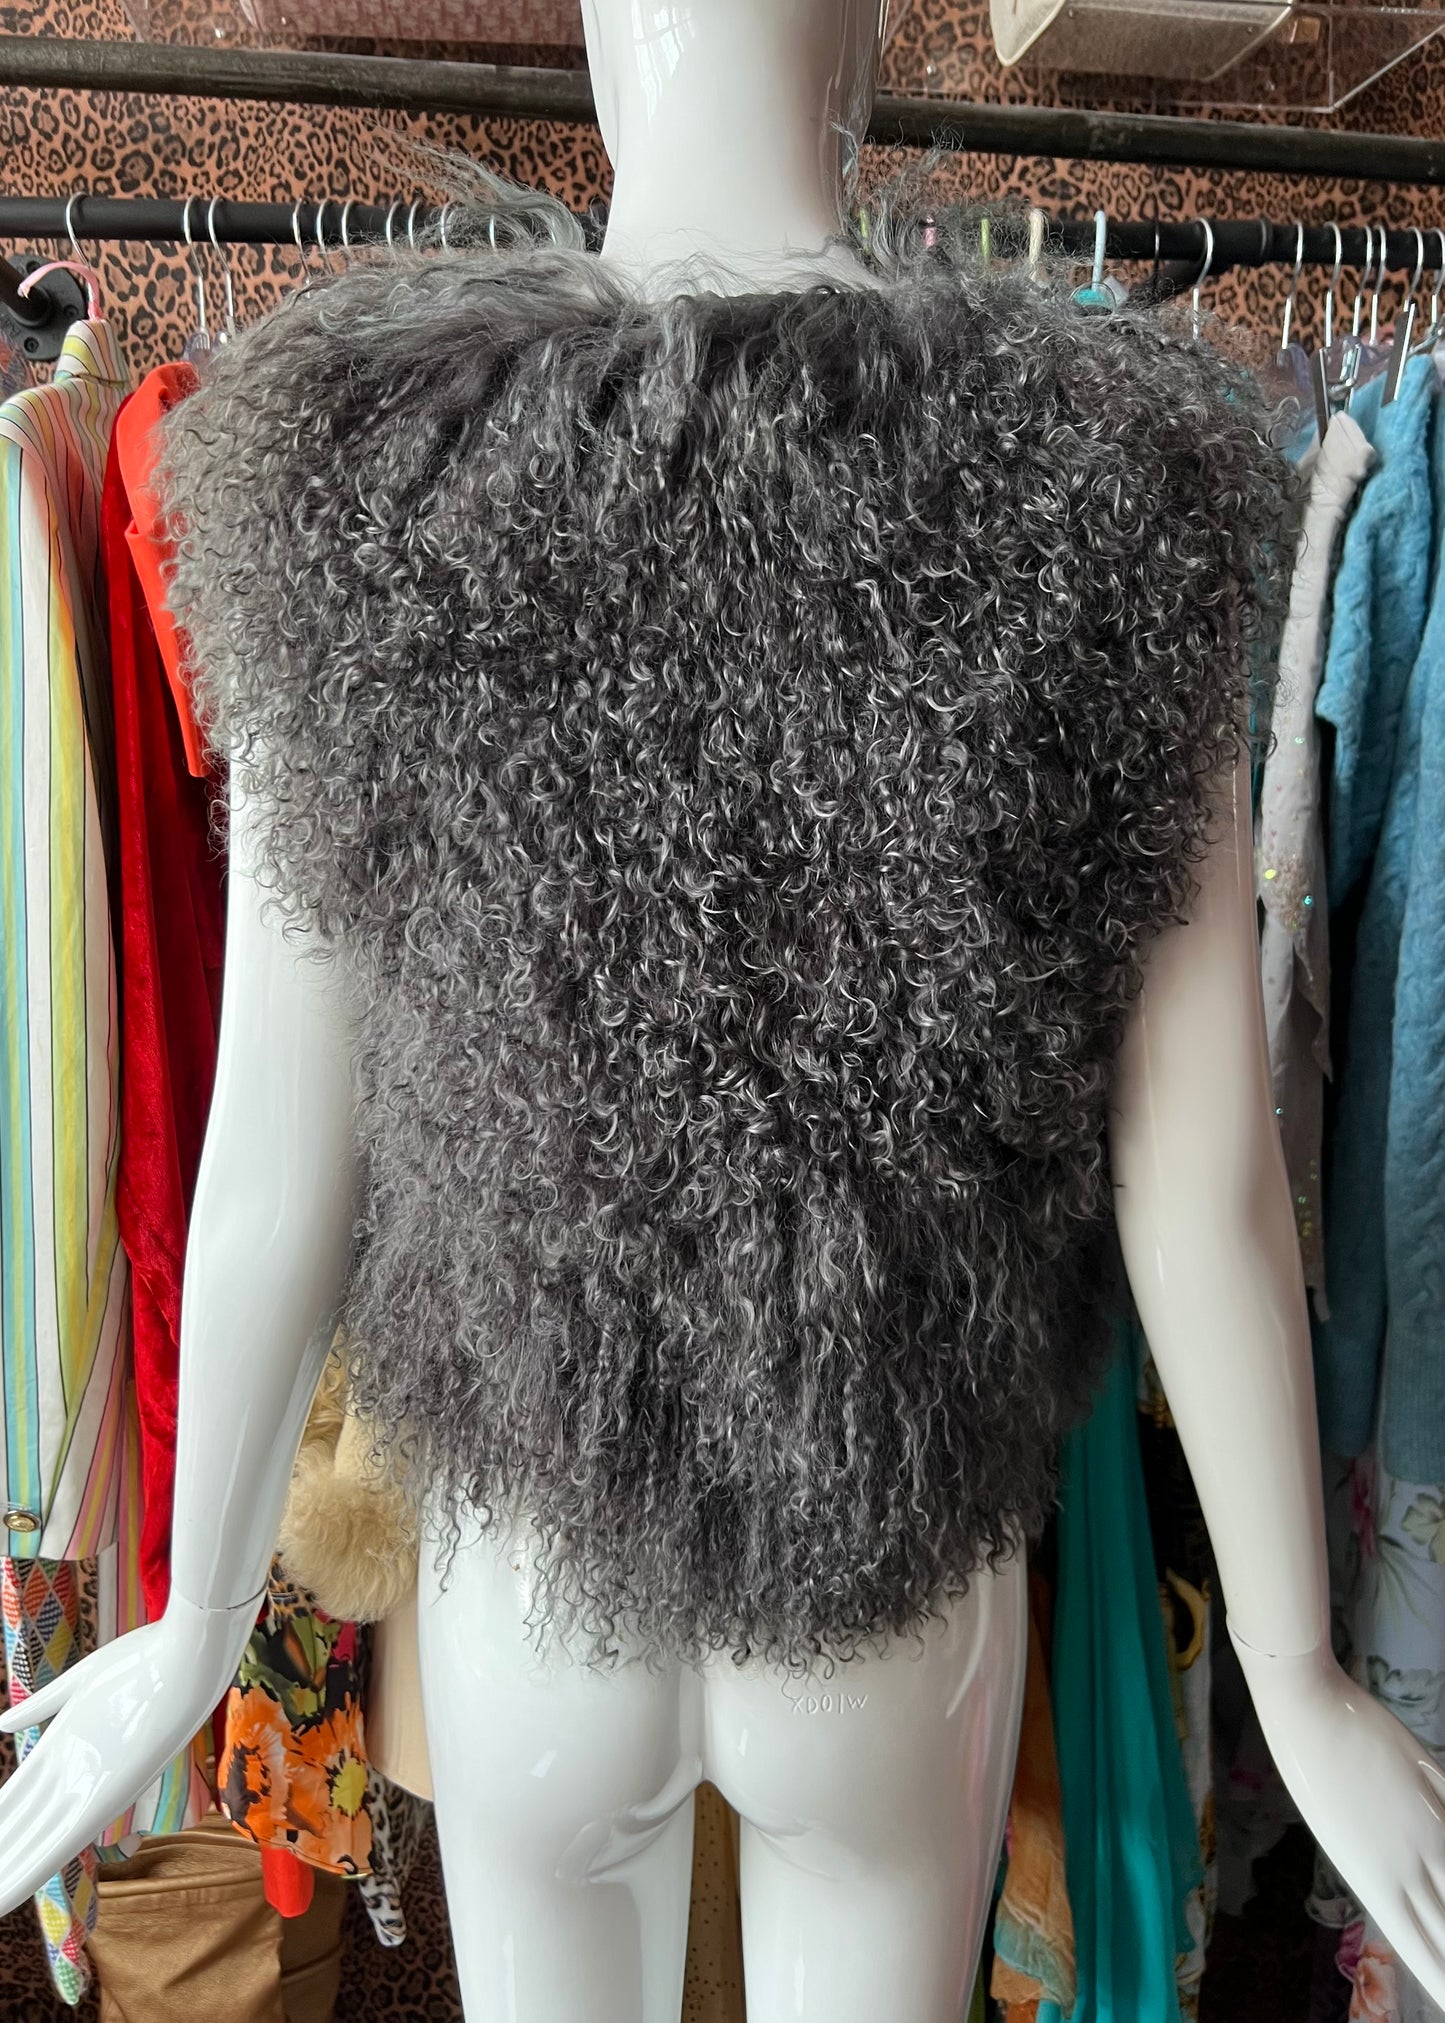 GOA Shearling Fur Vest- Grey